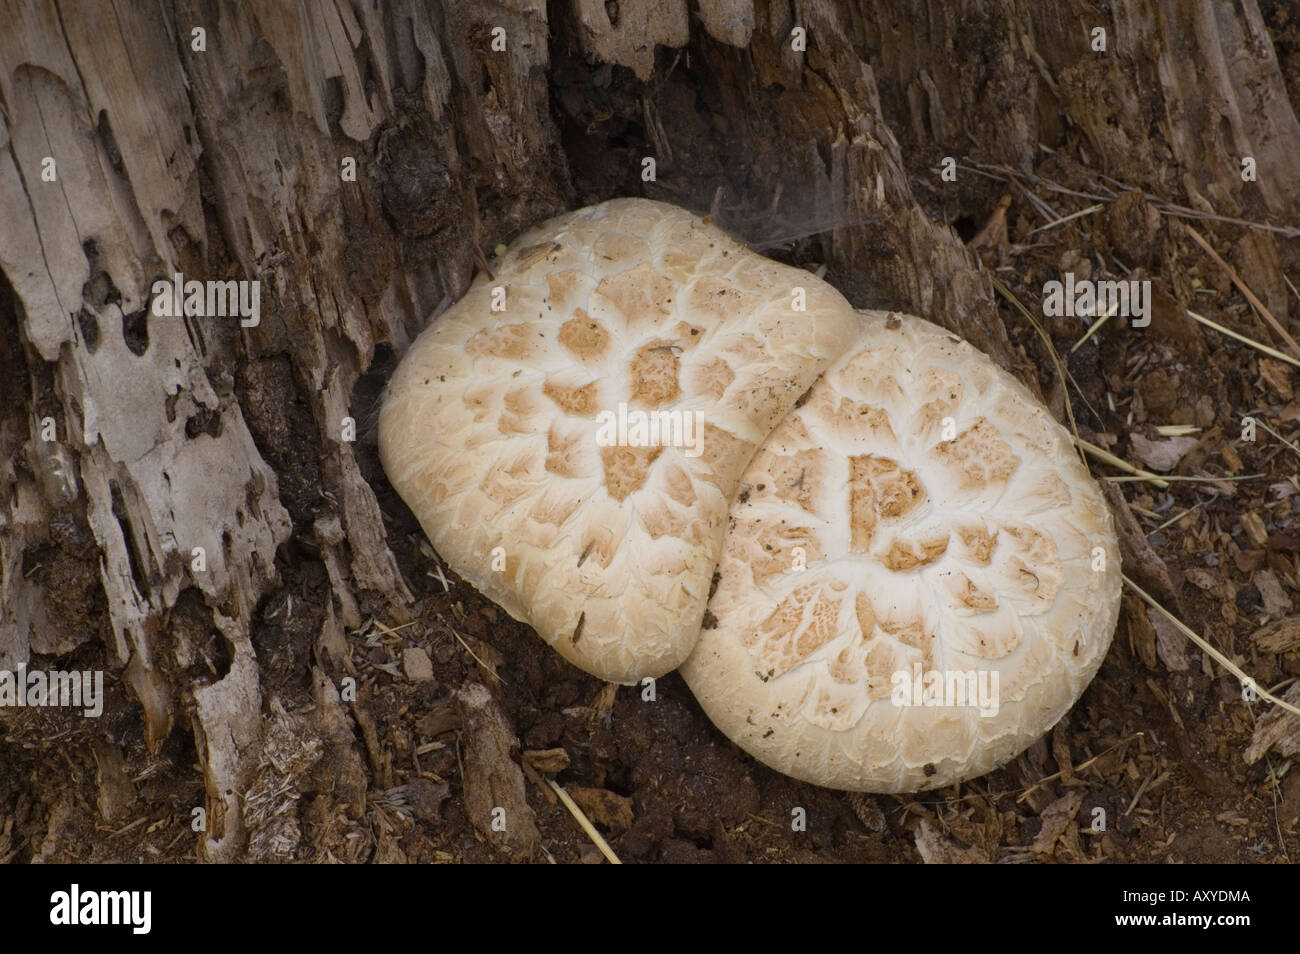 Large white mushroom fungus growing on tree stump in forest at Kiva Beach South Lake Tahoe California Stock Photo